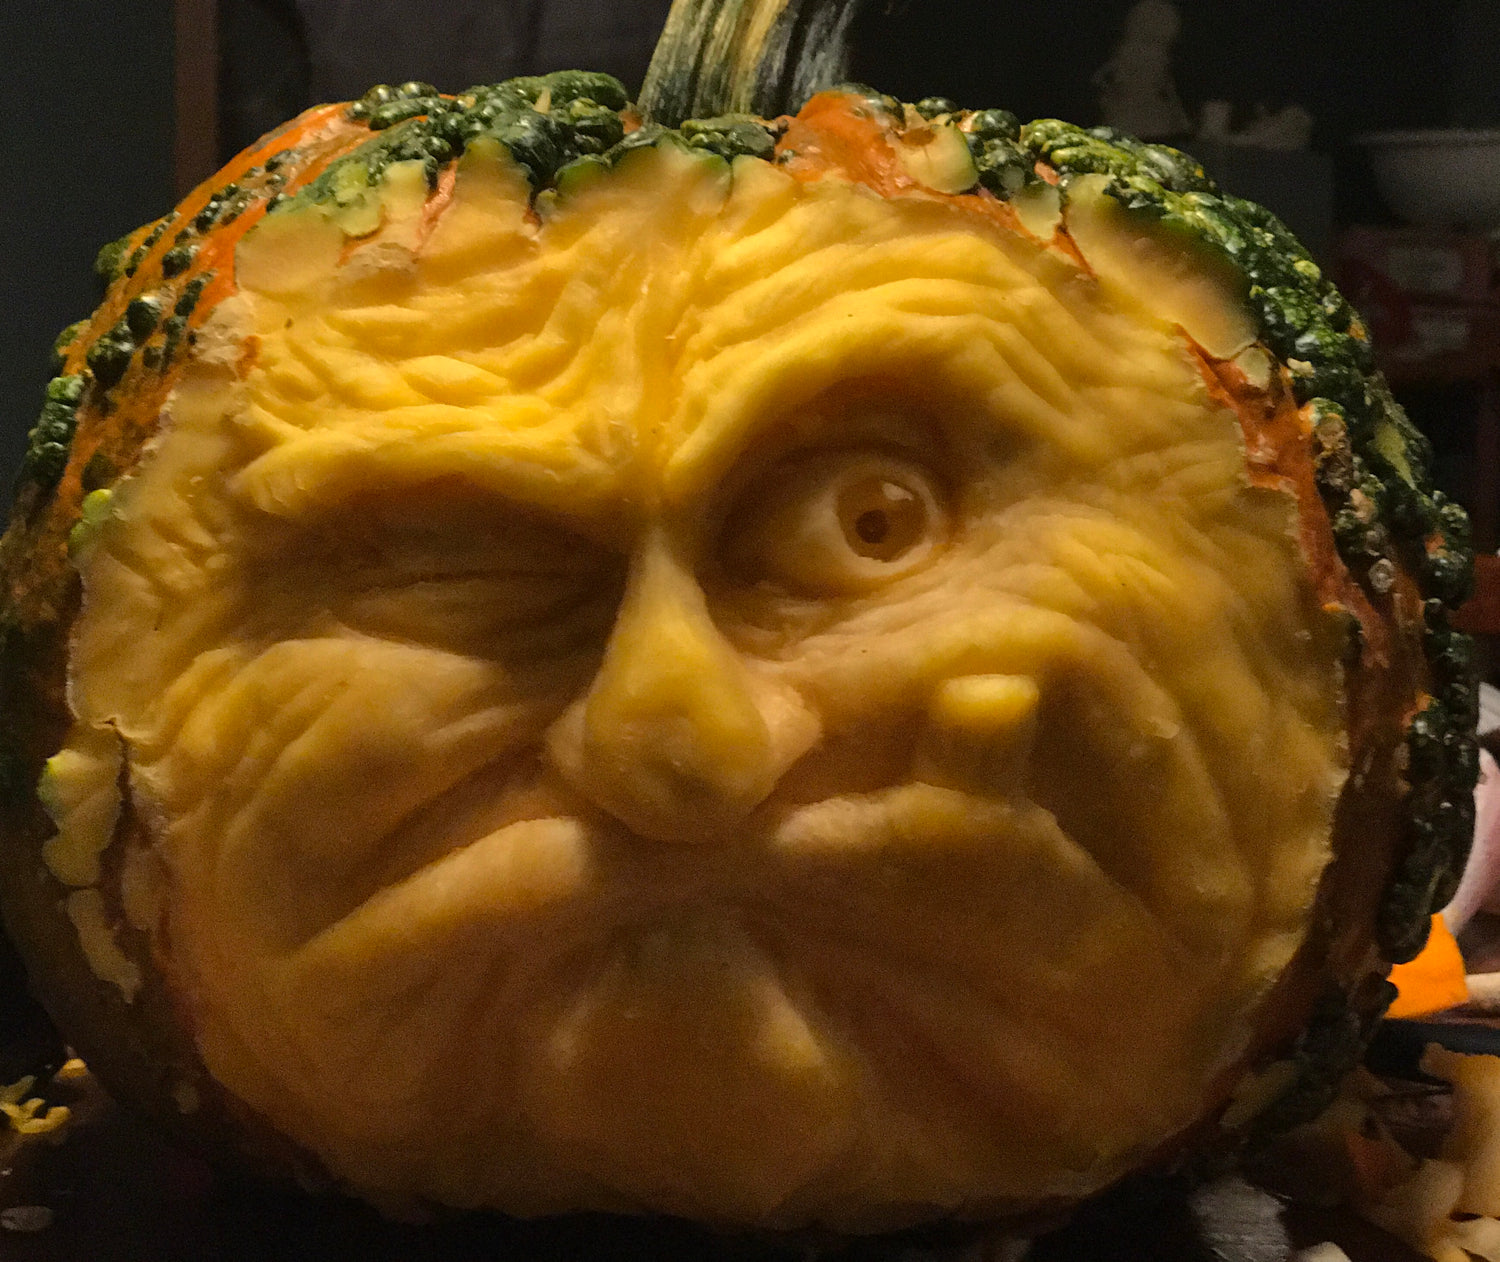 The Grumpy Pumpkin